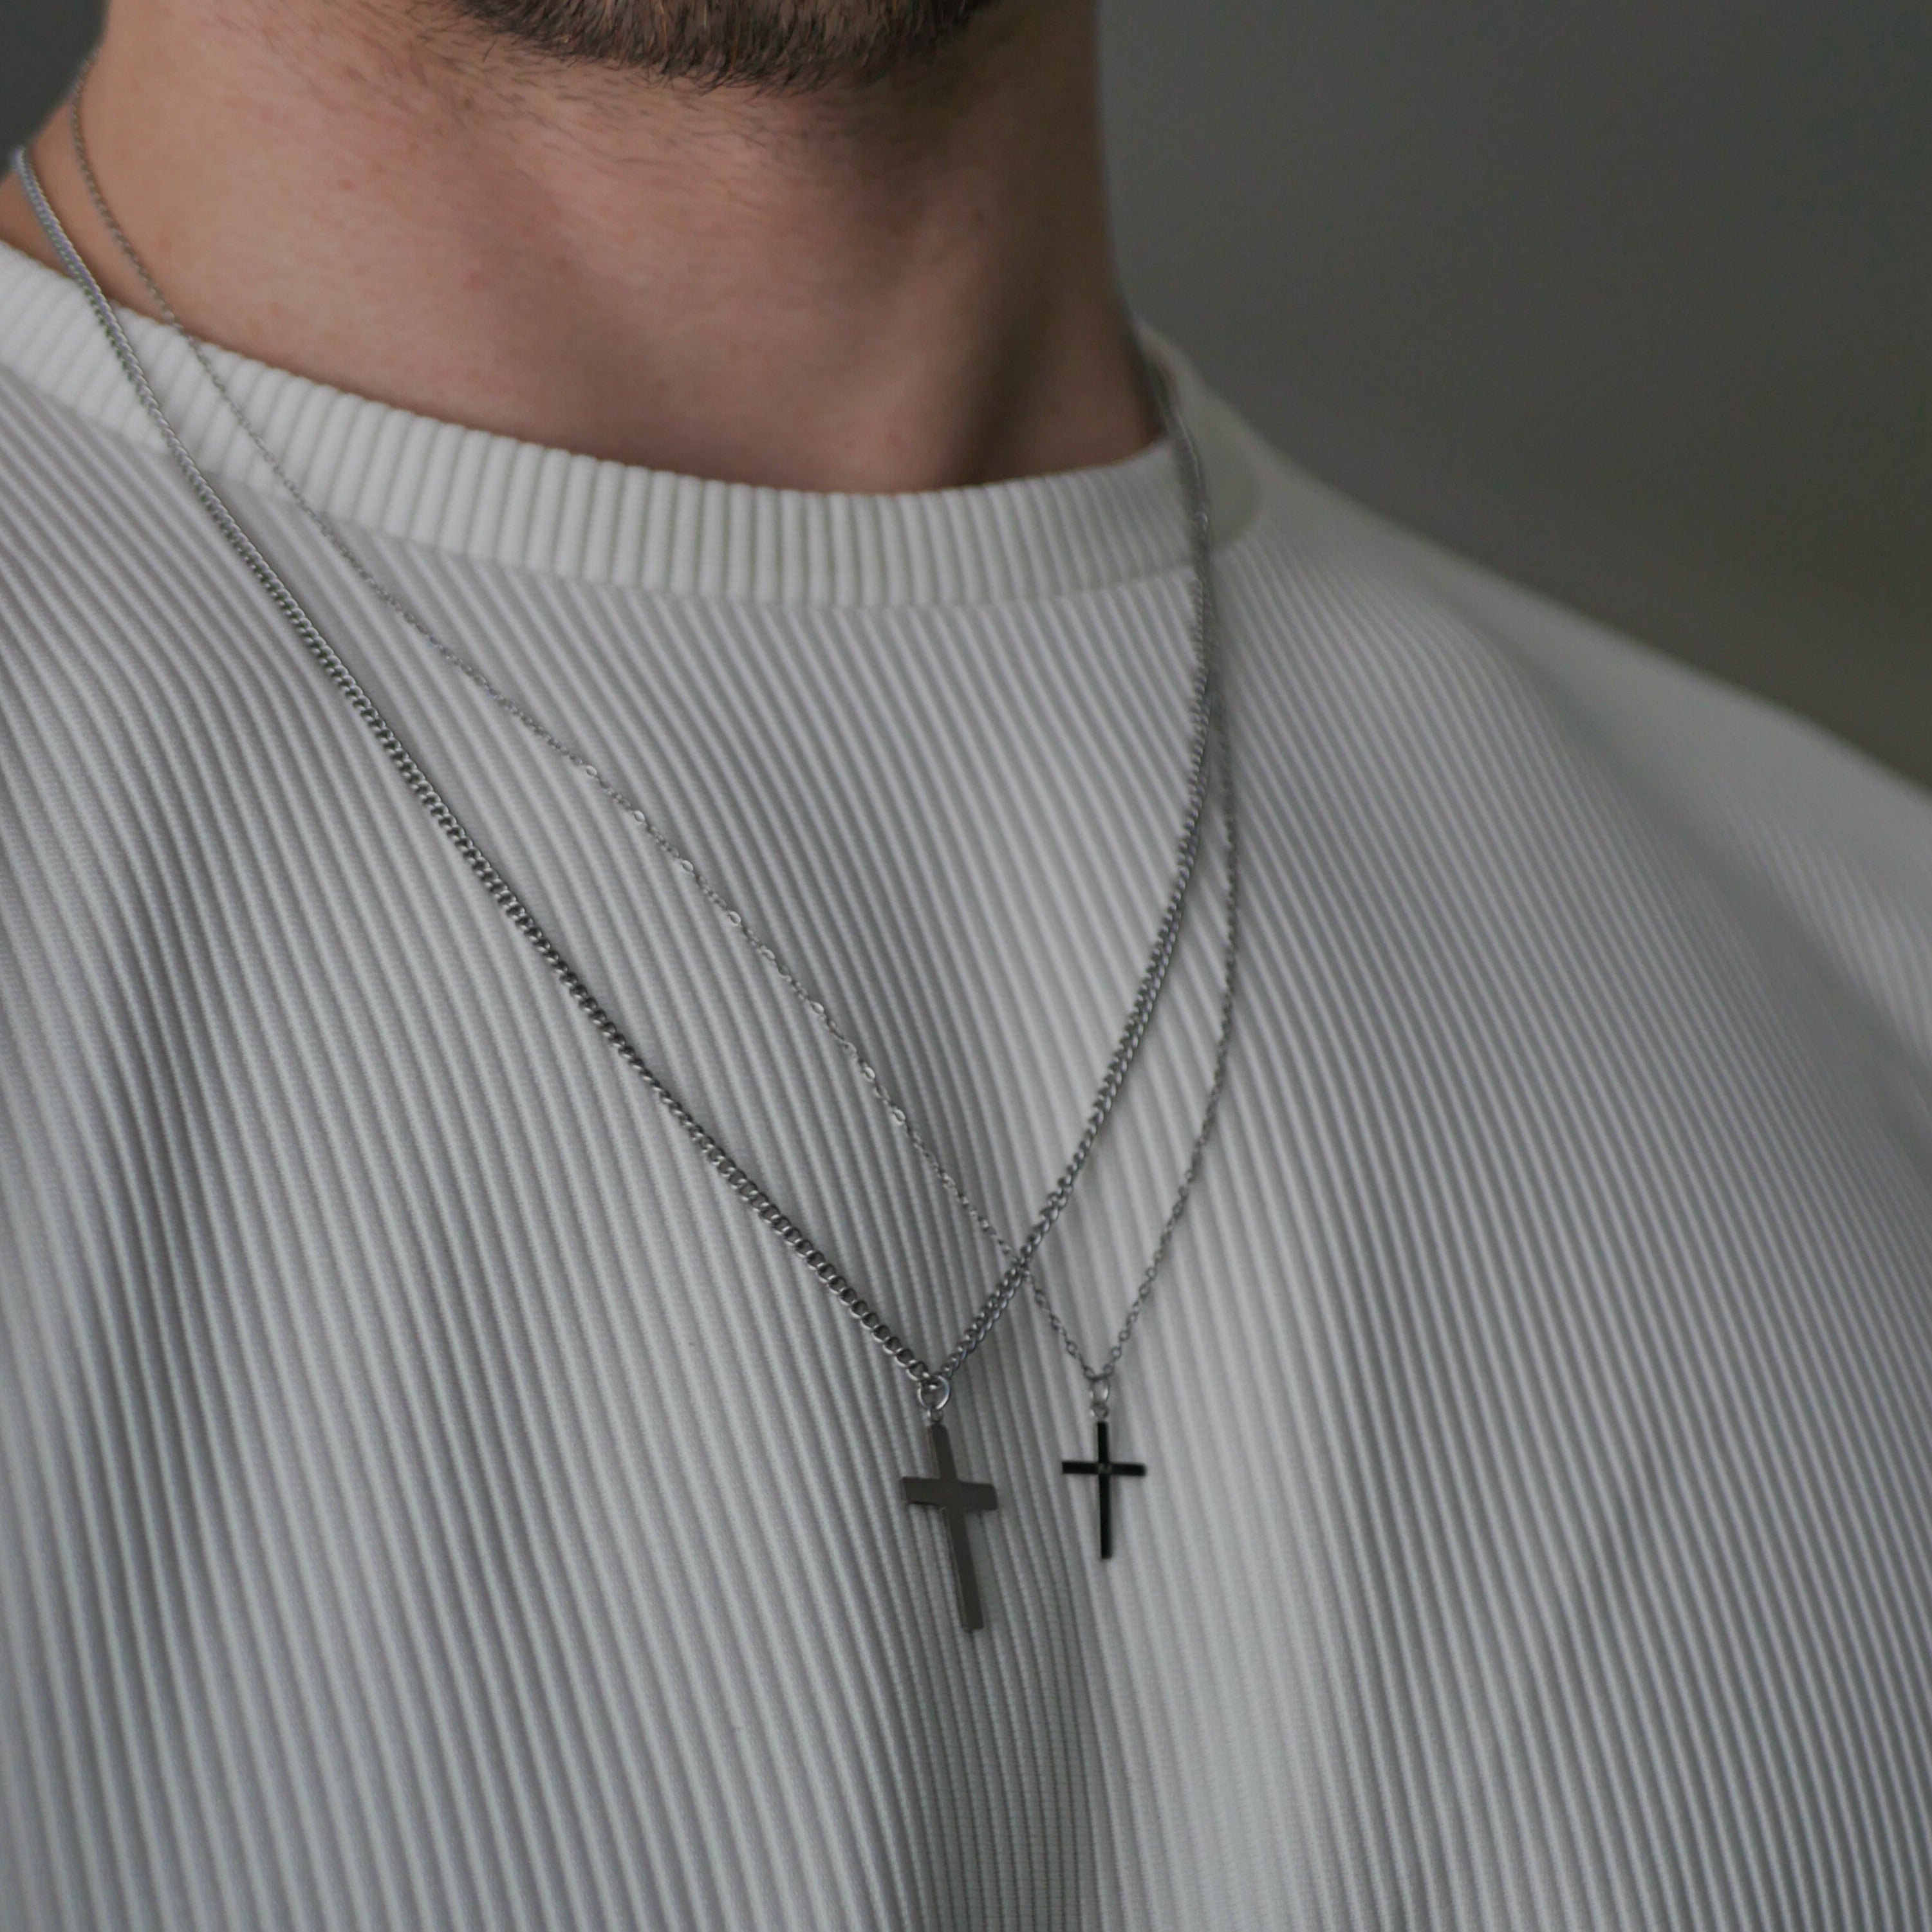 Small Cross Necklace - Silver Tone